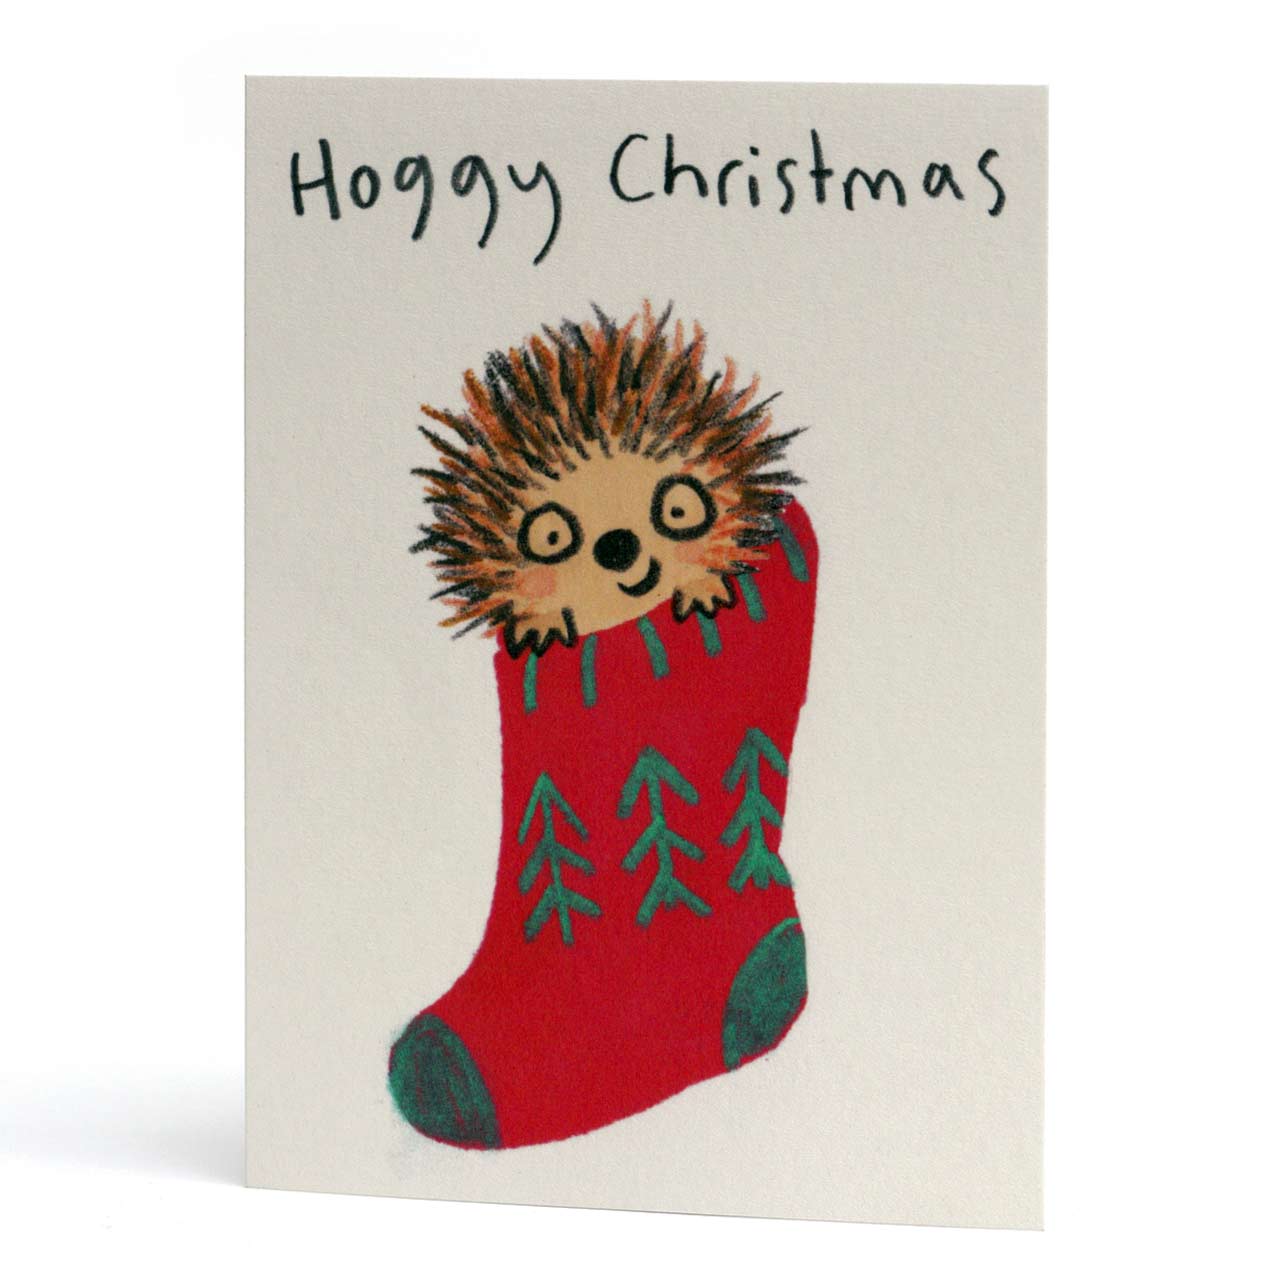 Hoggy Christmas Stocking Card